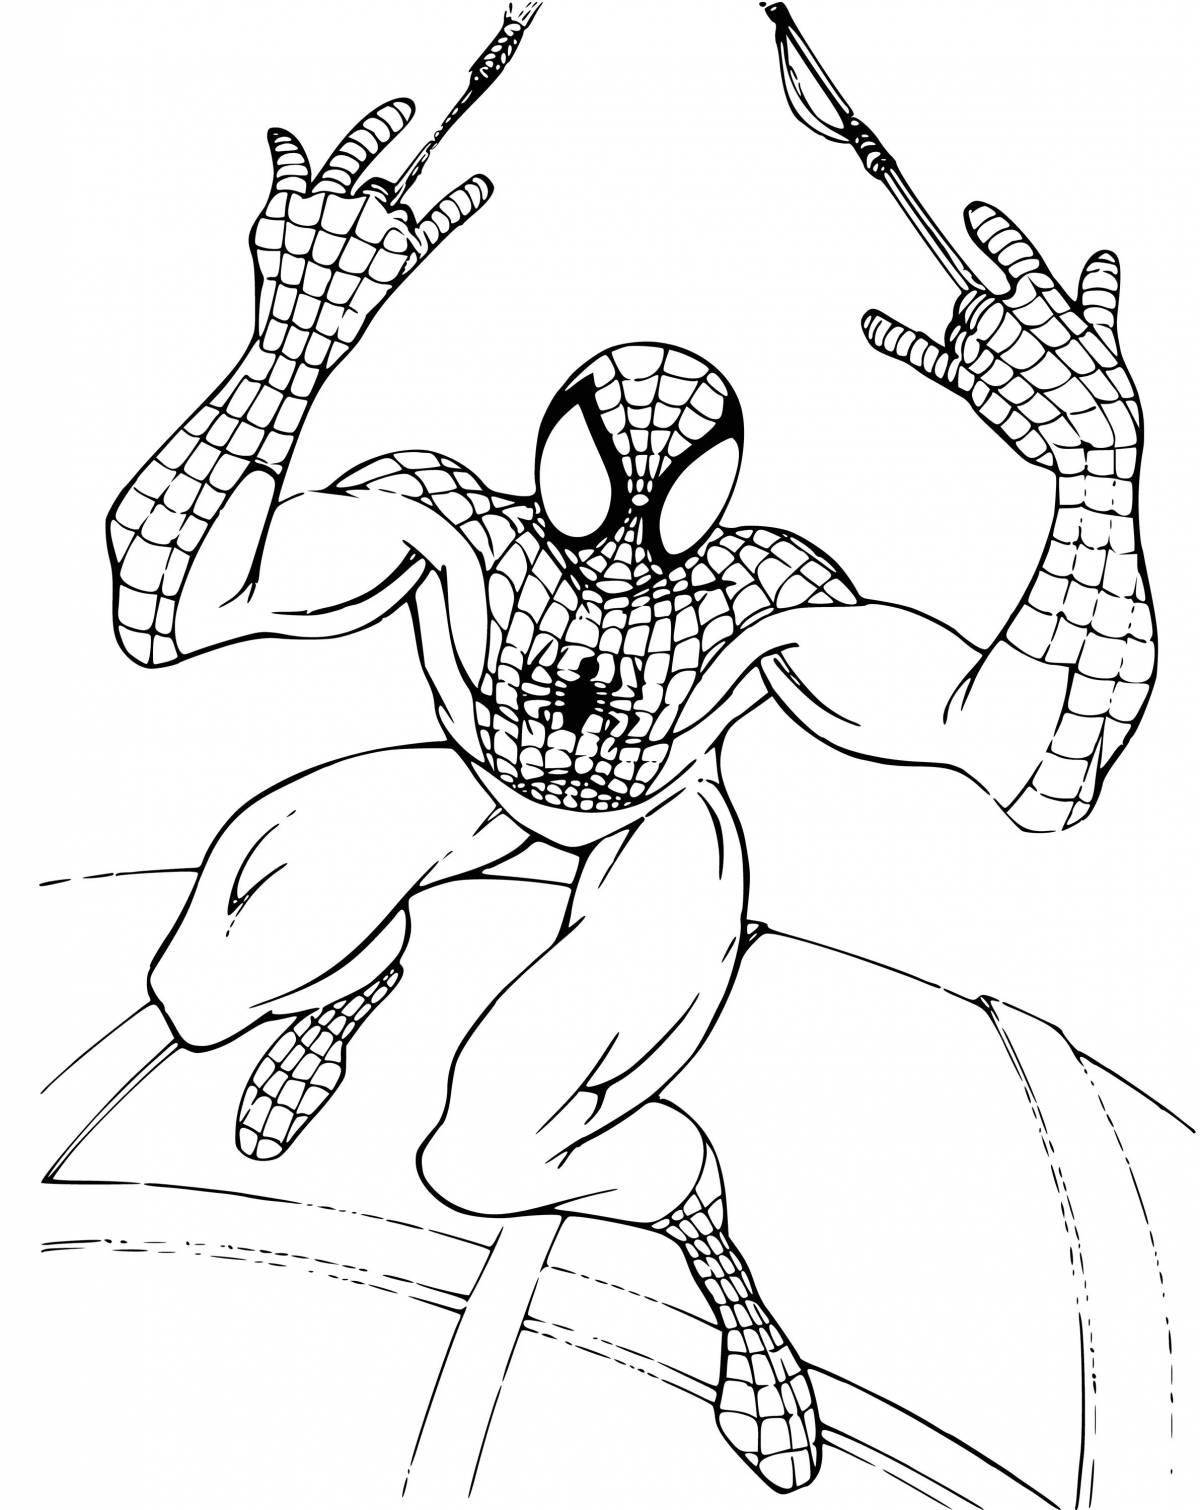 Monumental drawing of Spiderman